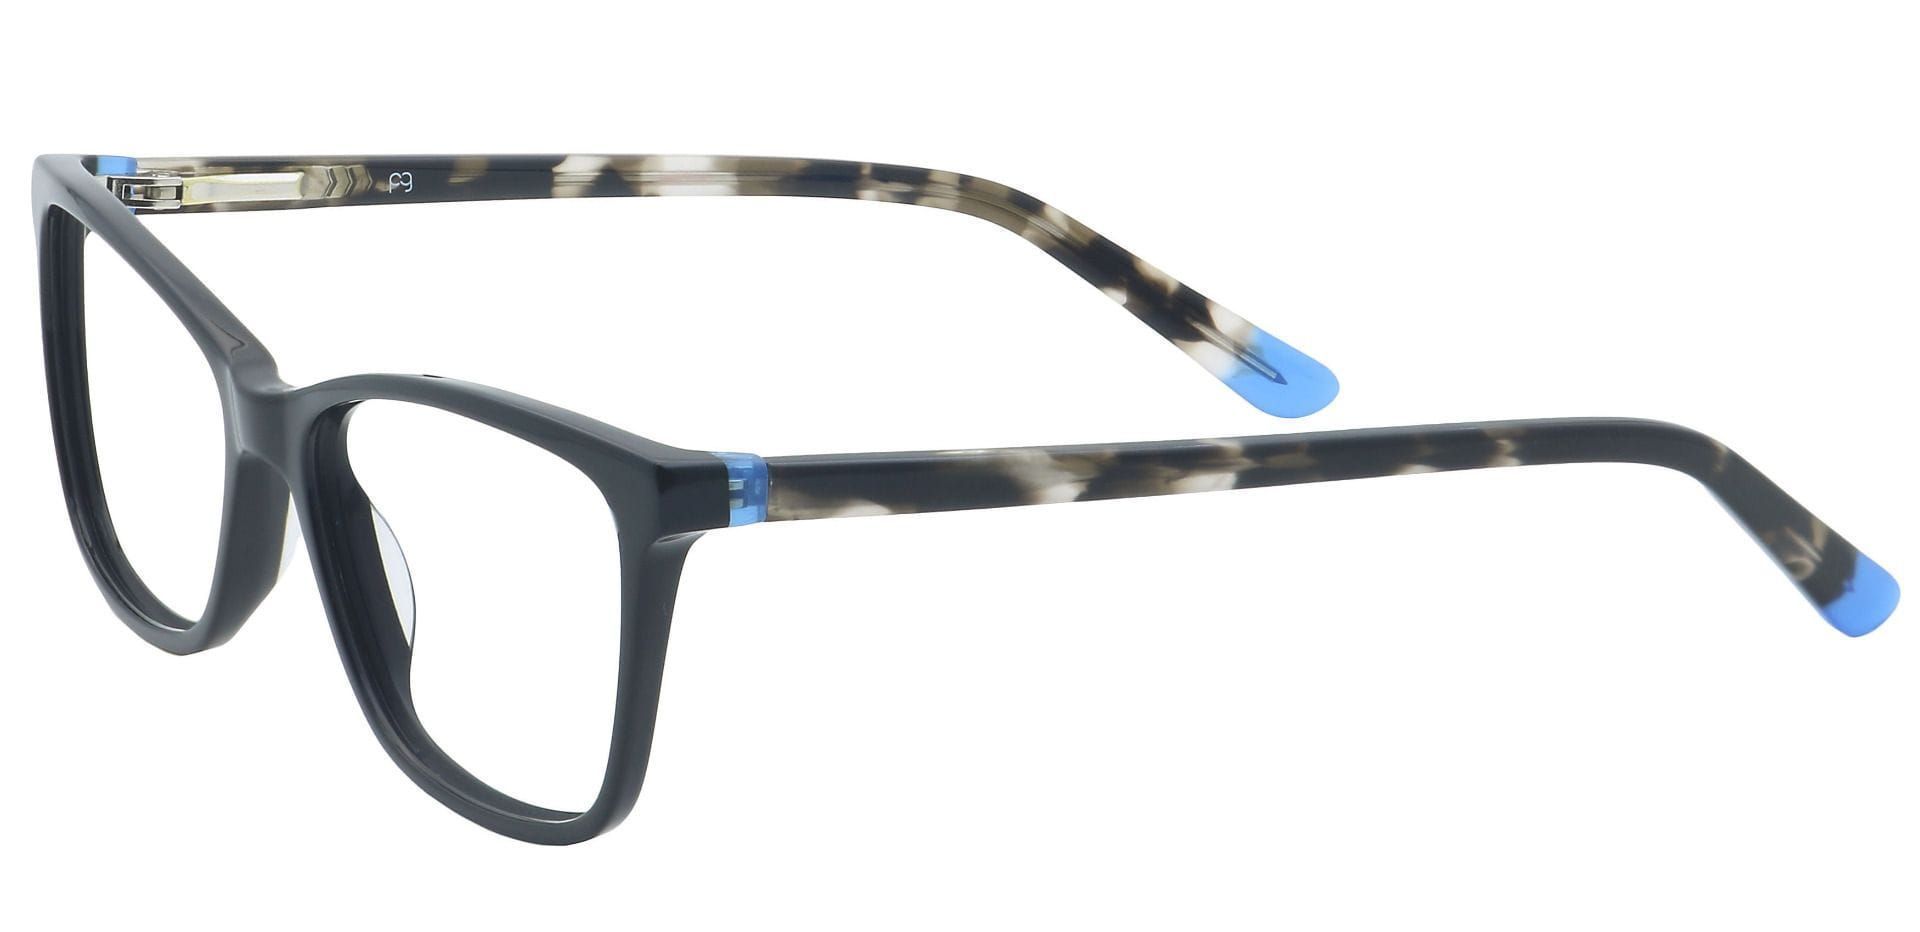 Zinnia Rectangle Prescription Glasses - Black | Women's Eyeglasses ...